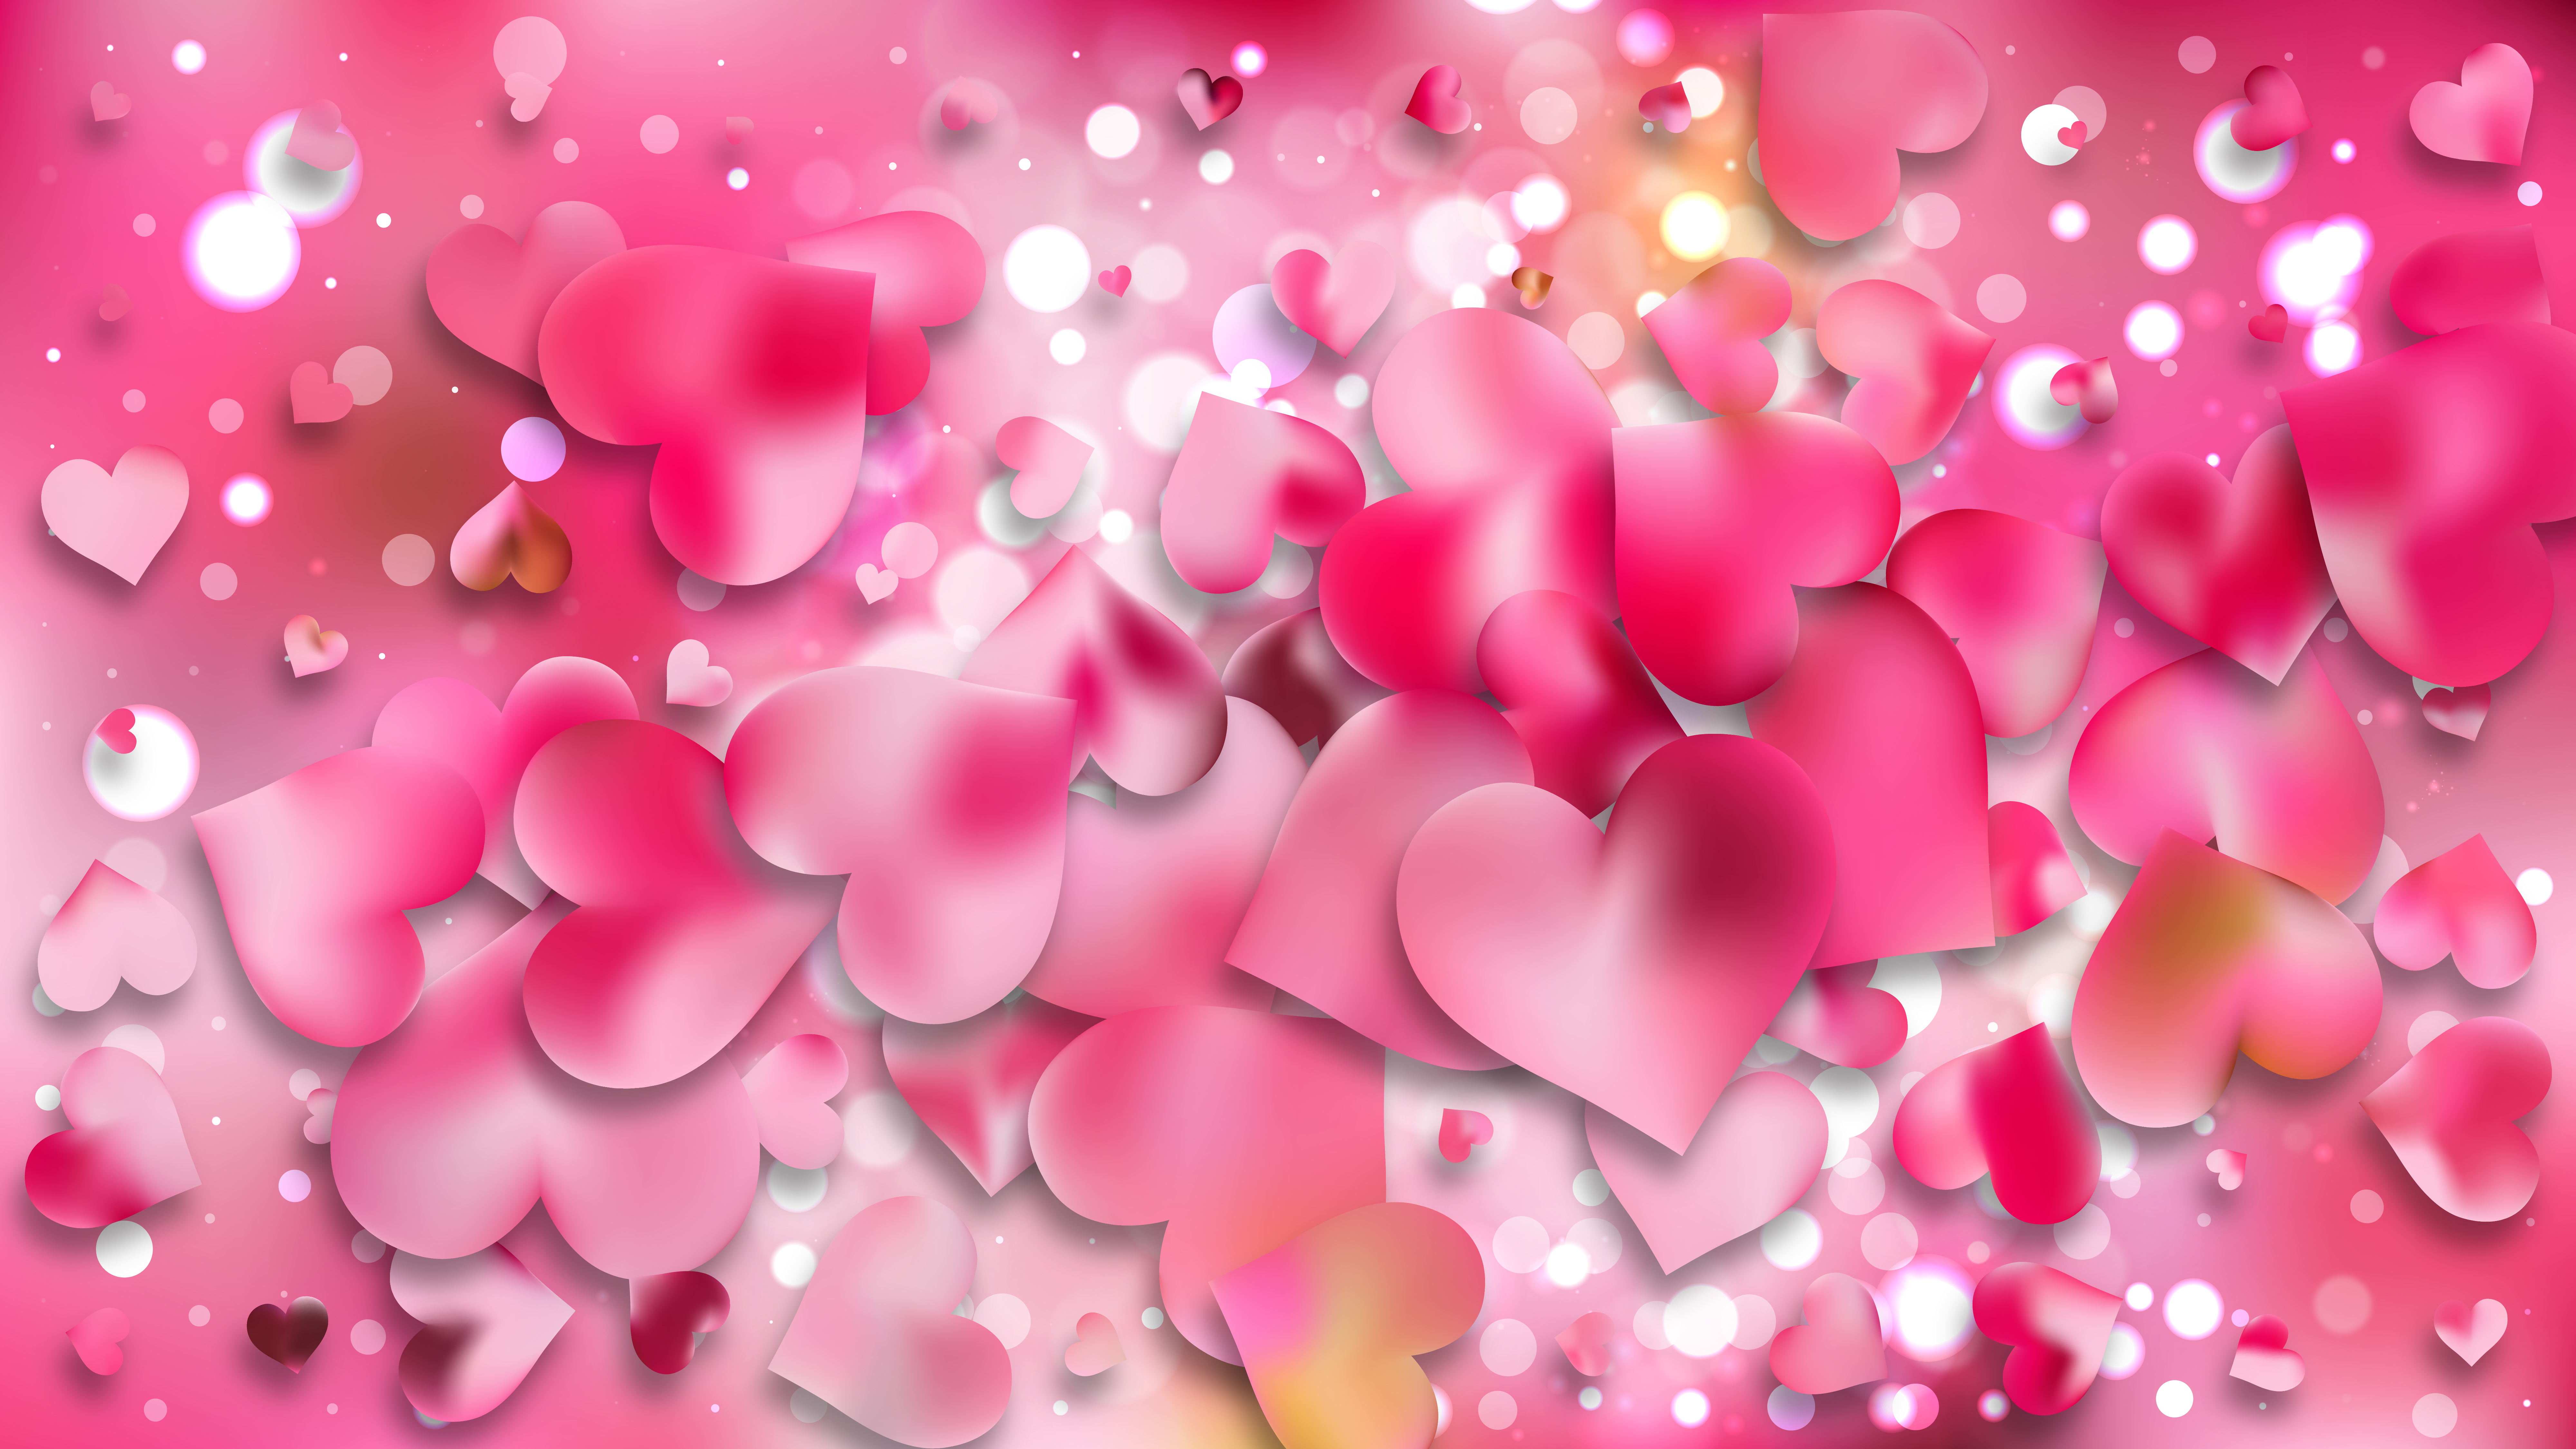 Pink Heart Wallpaper Background Vector Image - Pink With Heart Background - HD Wallpaper 